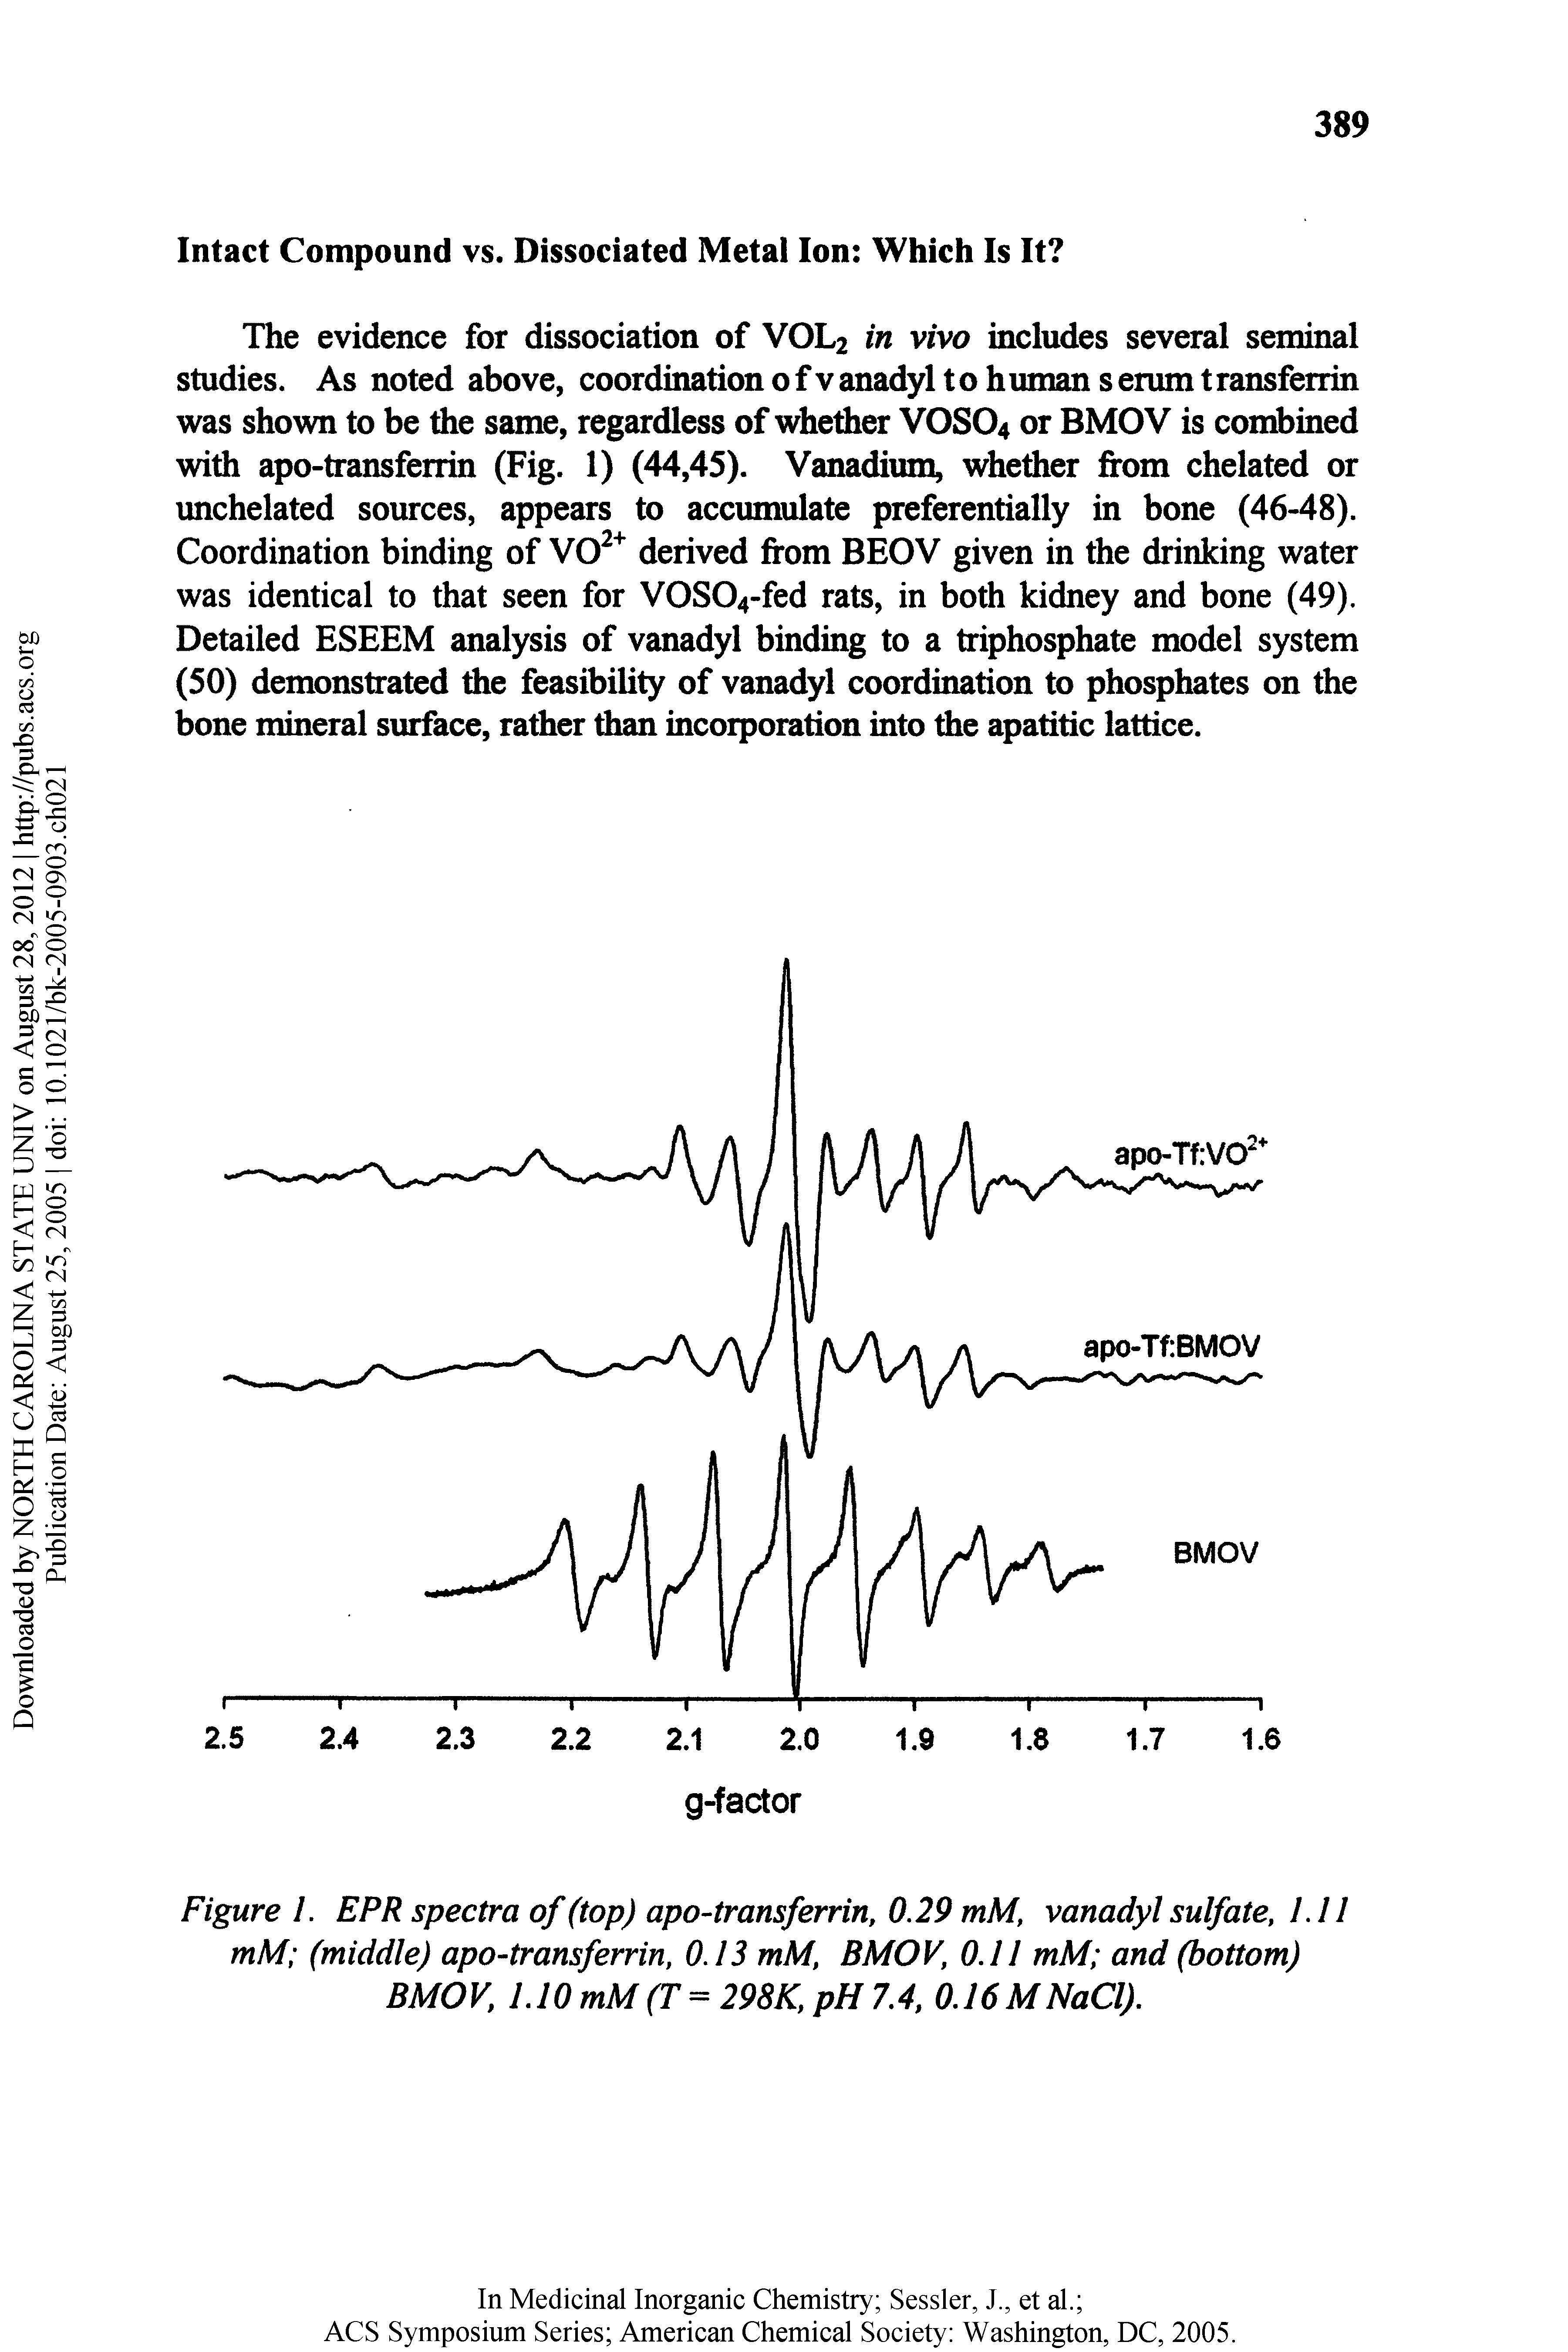 Figure /. EPR spectra of (top) apo-transferrin, 0.29 mM, vanadyl sulfate, 1.11 mM (middle) apo-transferrin, 0.13 mM, BMOV, 0.11 mM and (bottom) BMOV, L10mM(T==298K,pH7.4, 0.16MNaCl).